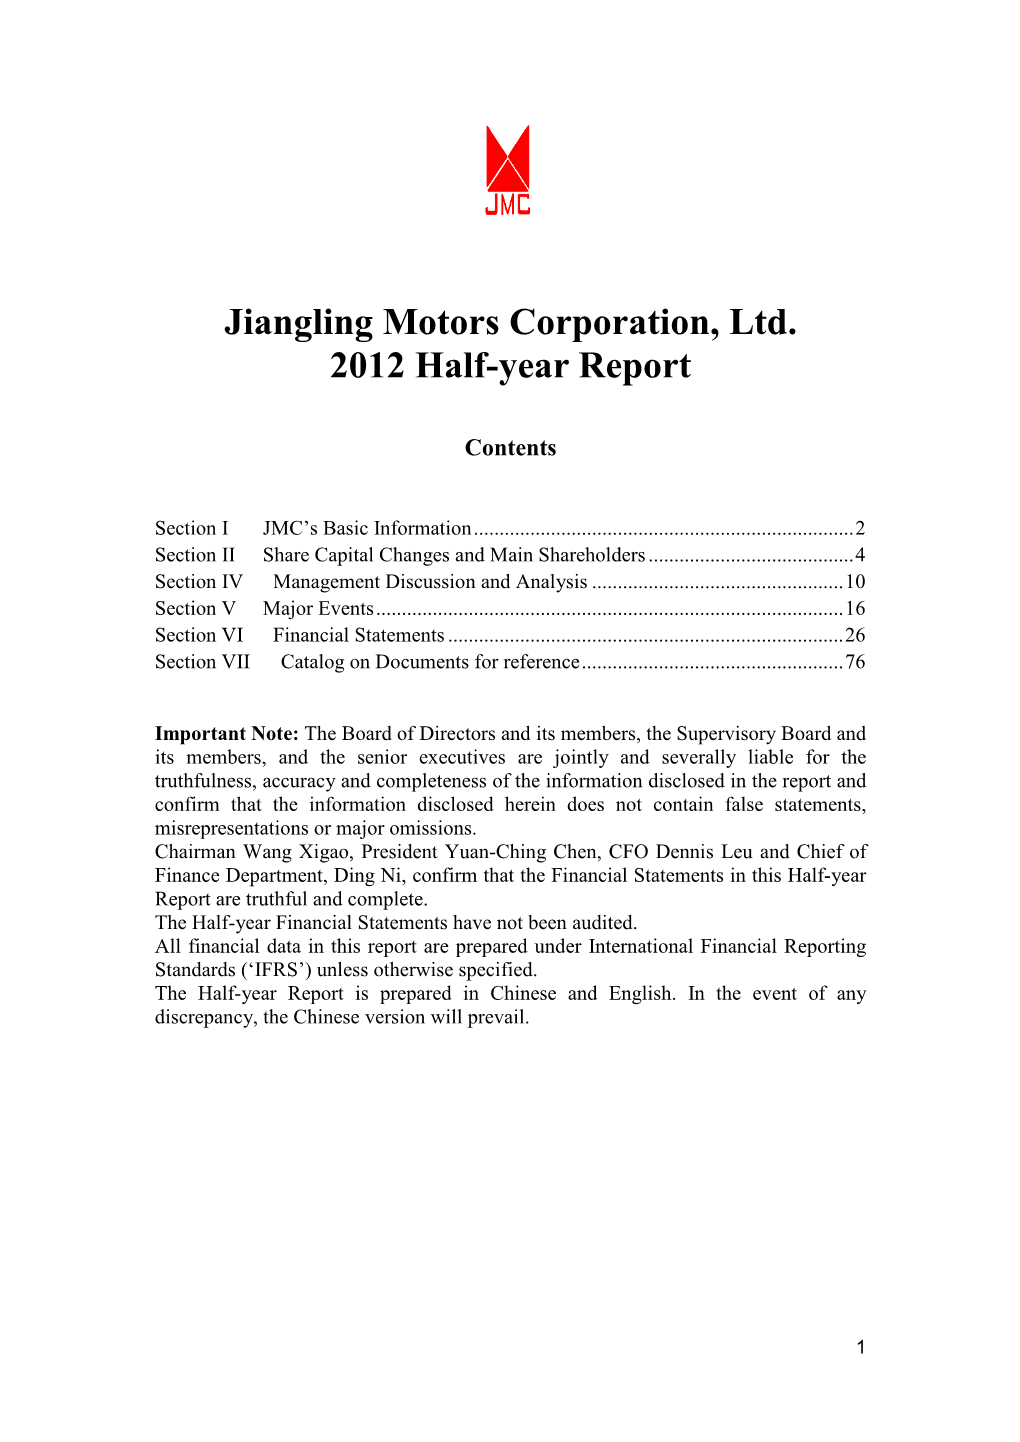 Jiangling Motors Corporation, Ltd. 2012 Half-Year Report